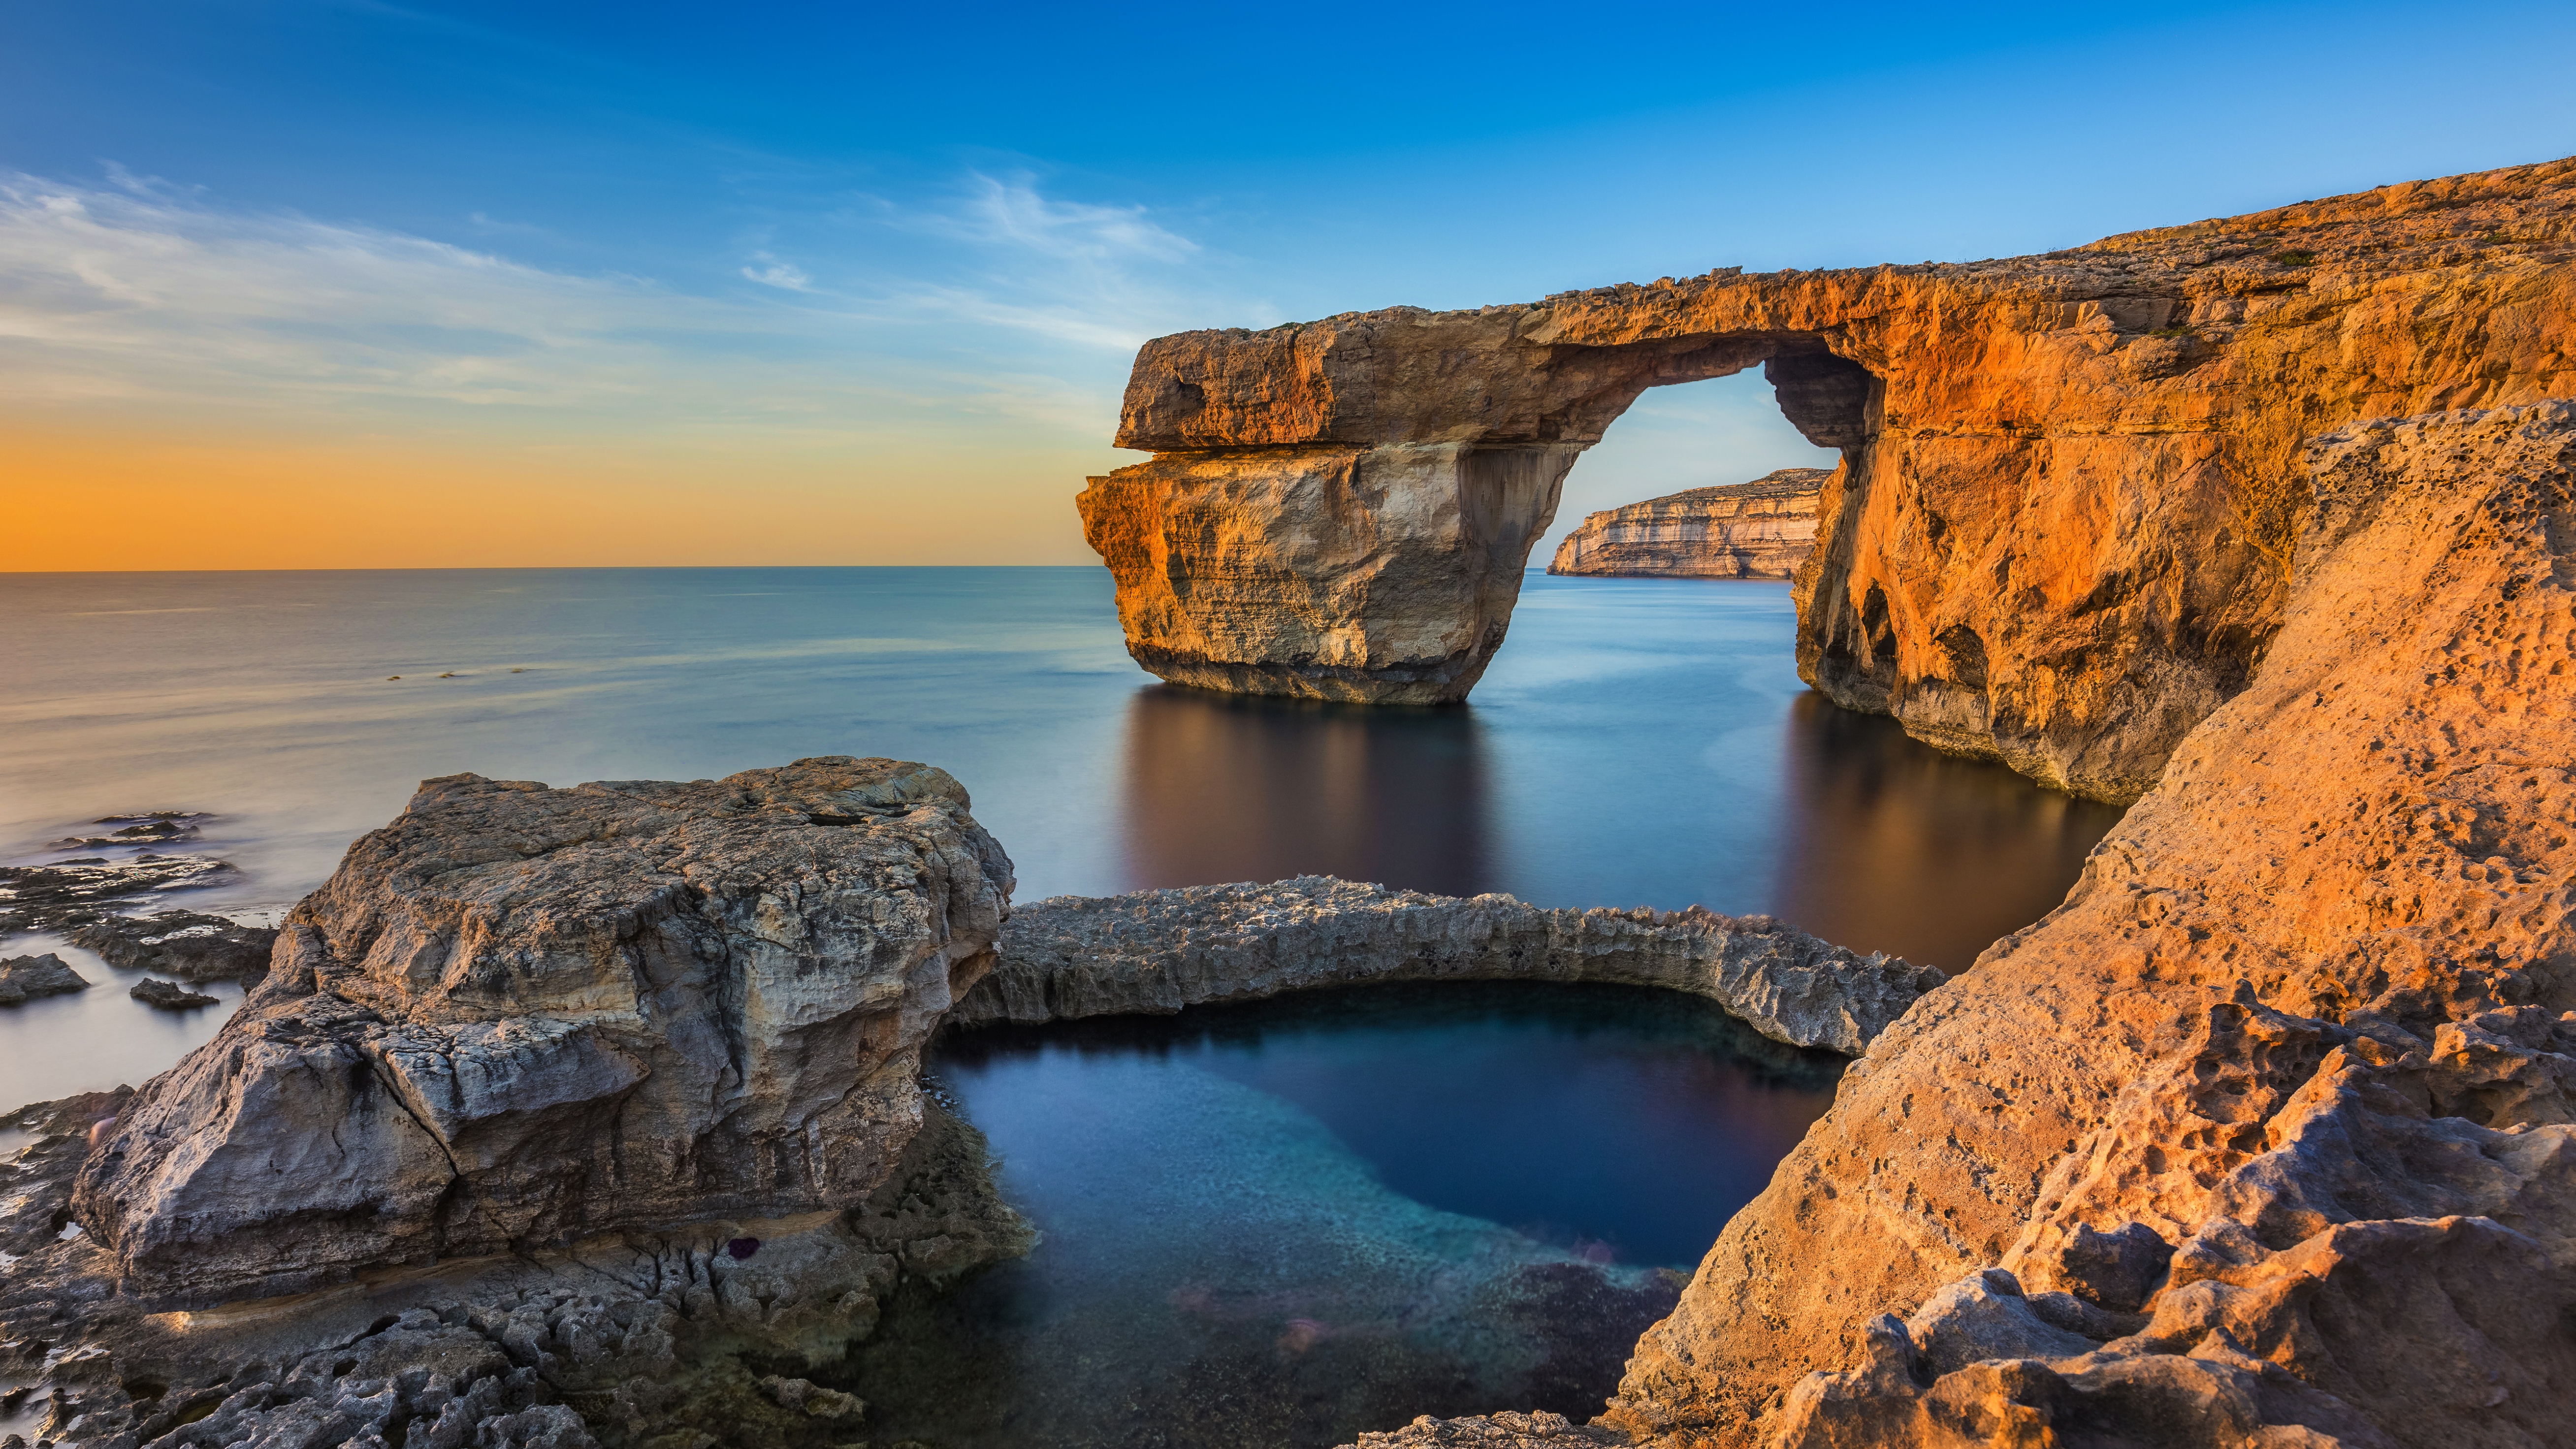 Destination image of Malte